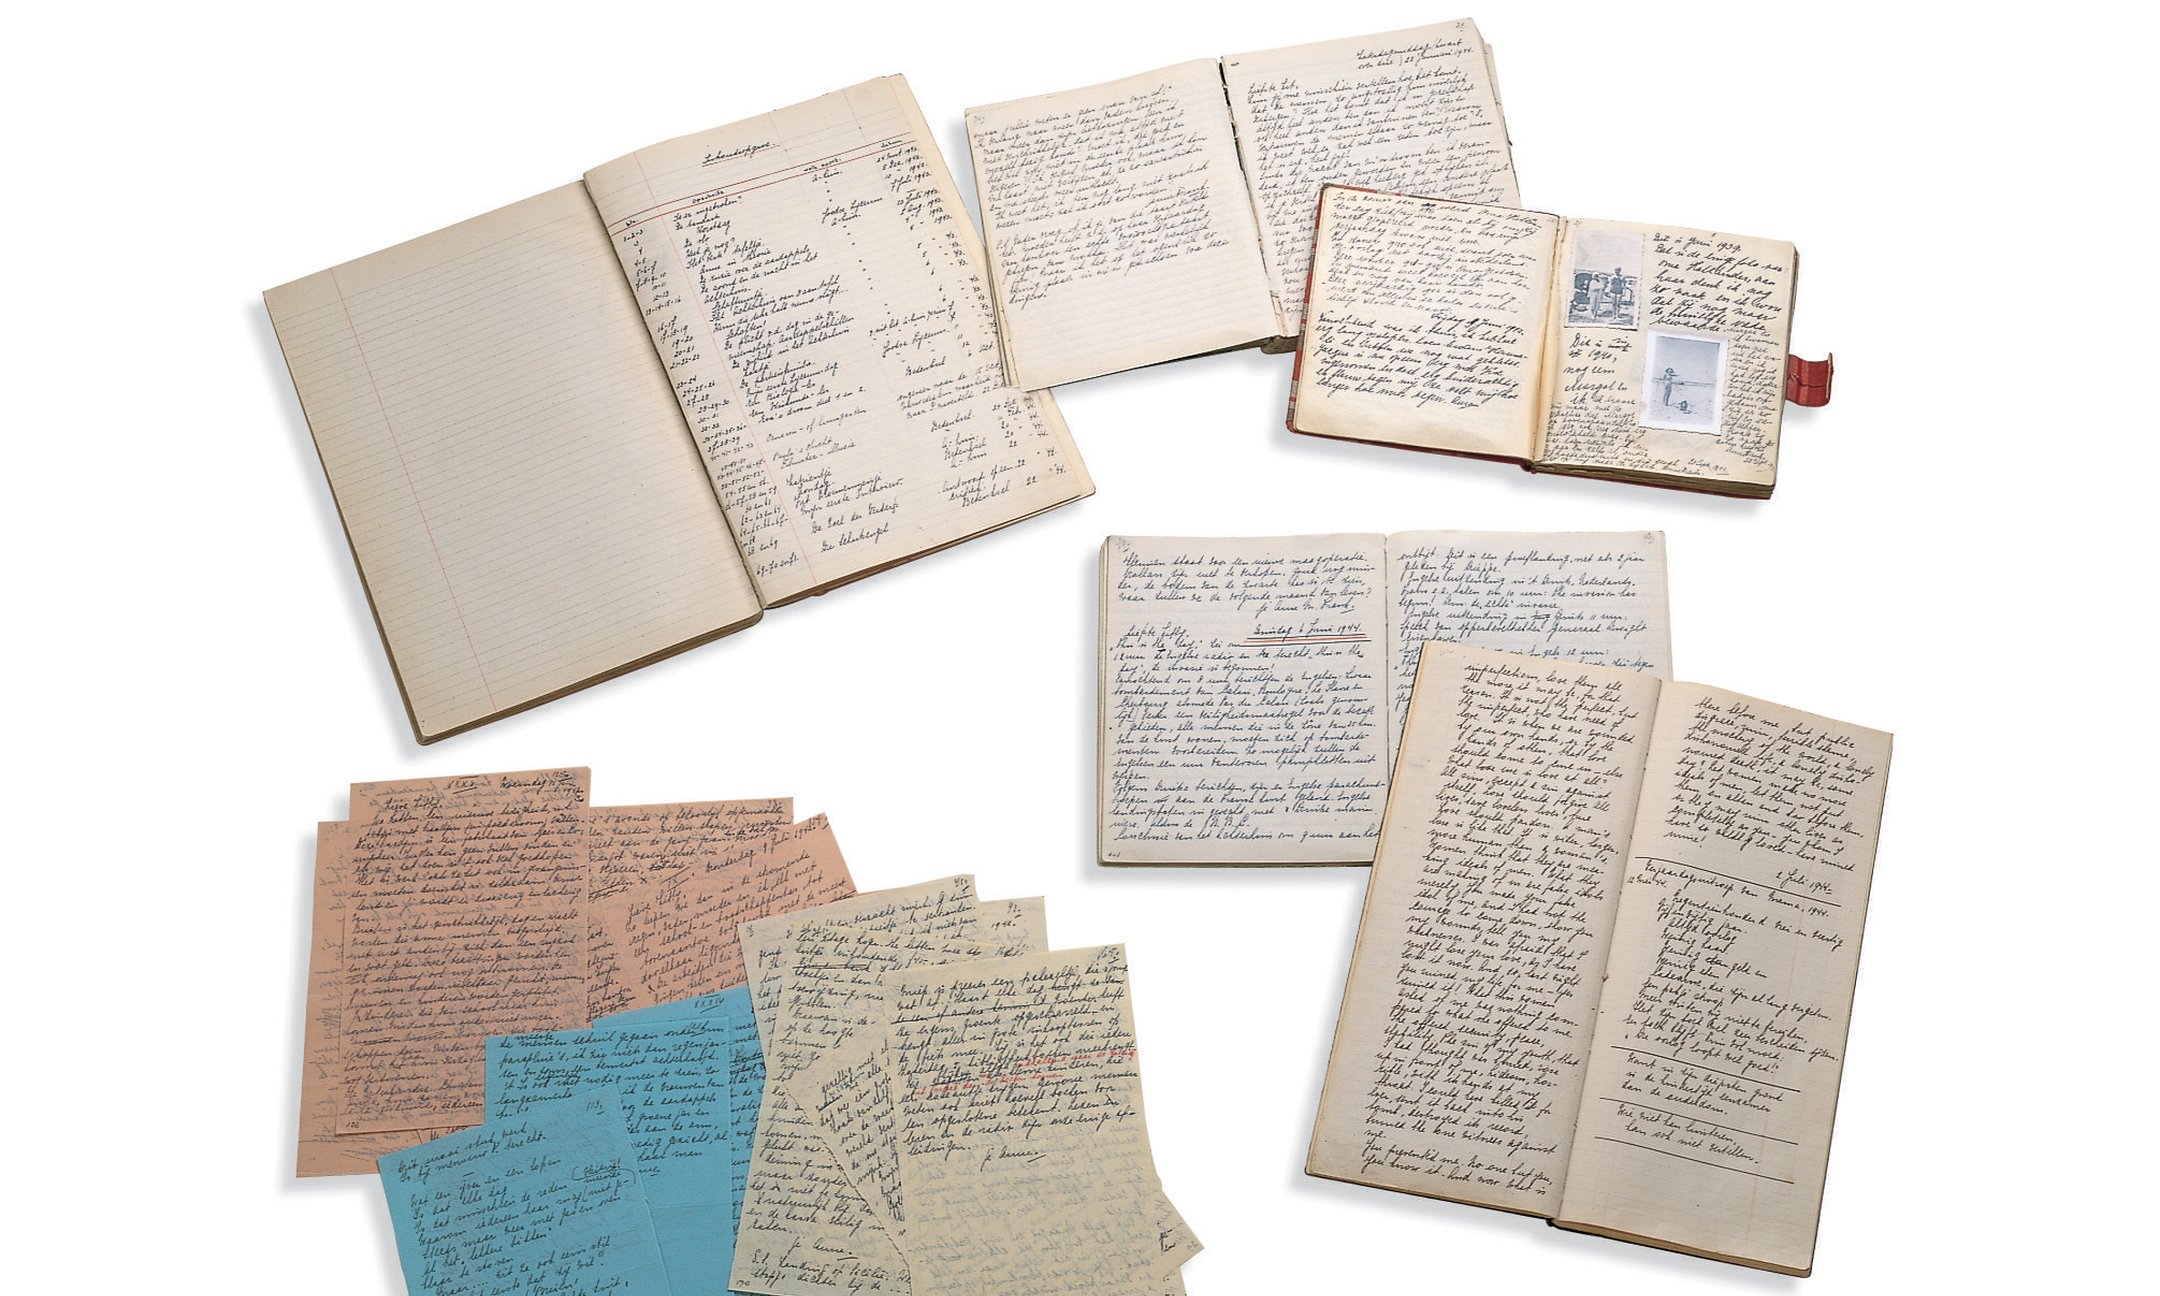 The manuscripts ofAnne Frank